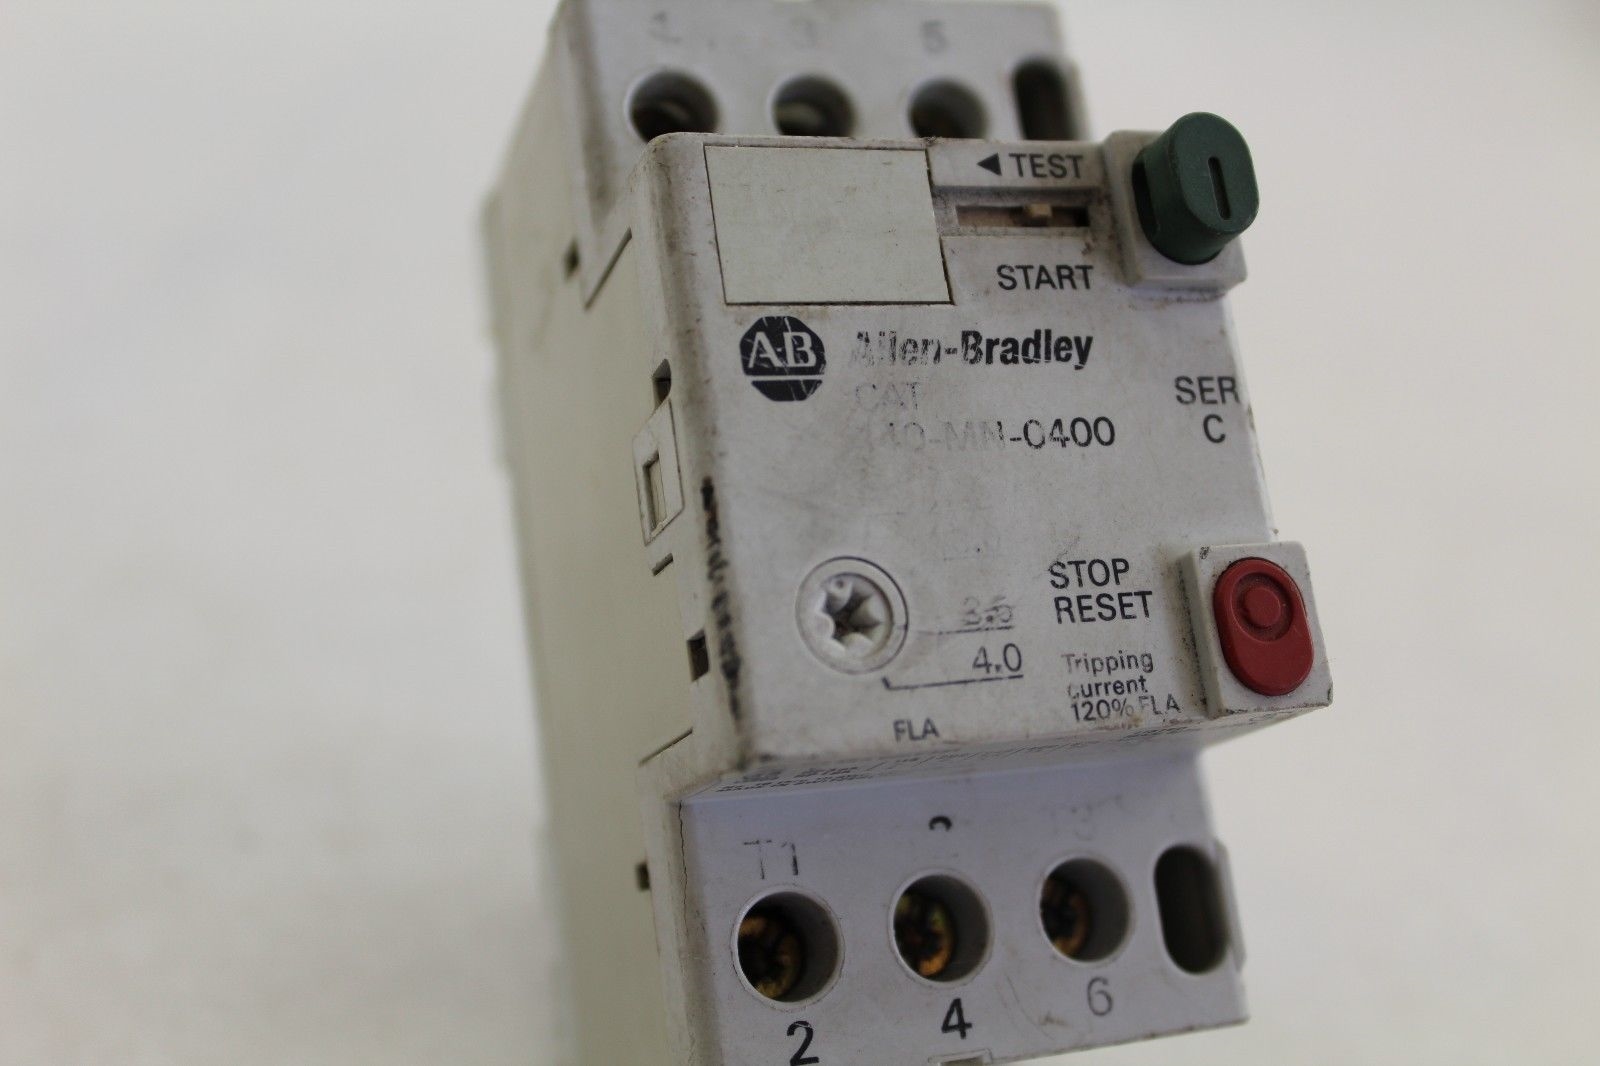 ALLEN BRADLEY 140-MN-C400 SERIES C MANUAL STARTER USED (A596) 1